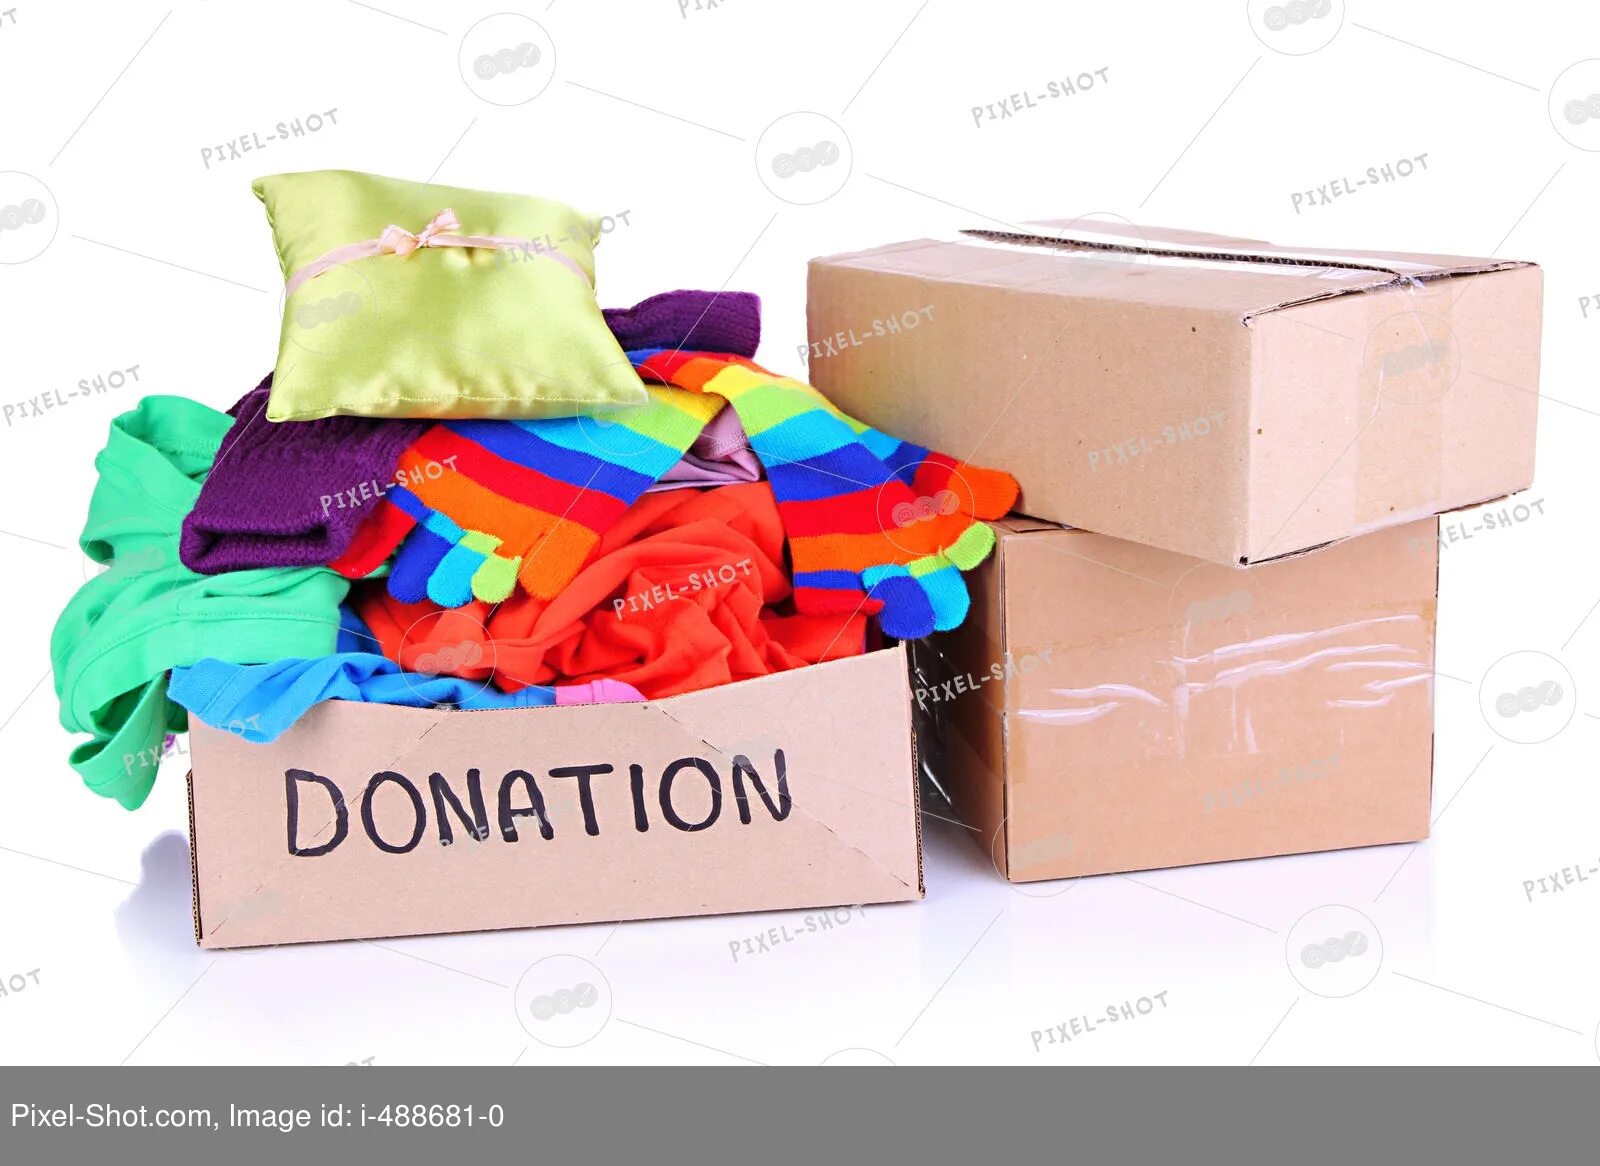 Доната одежда. Коробки для одежды. Коробка для Донейшен. Одежда в коробке. Donation clothes.